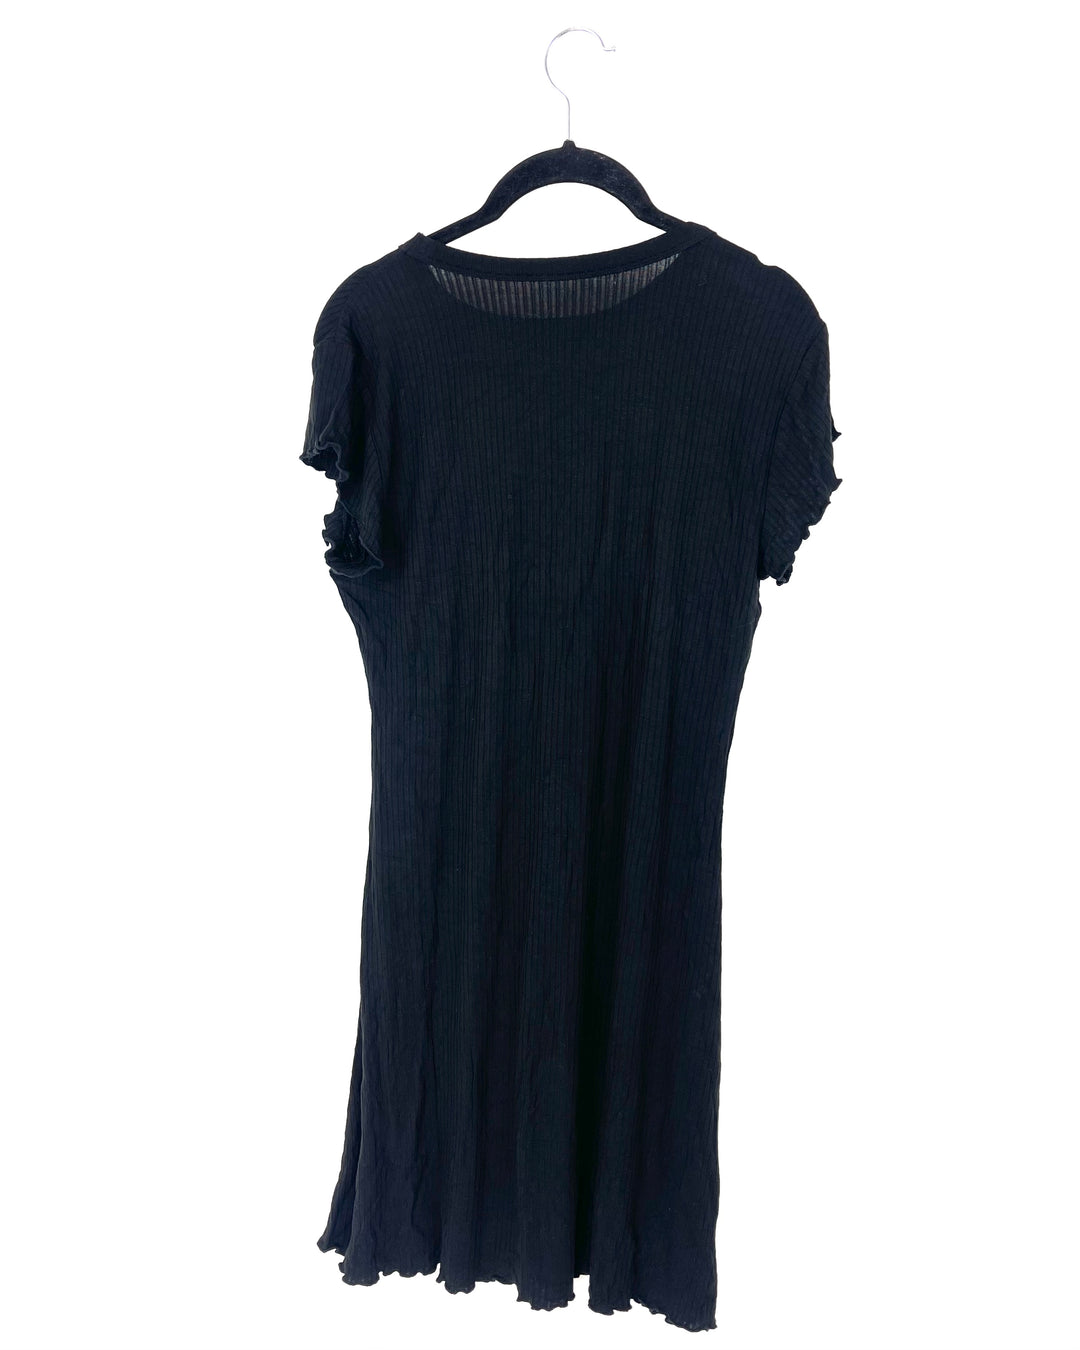 Black Ribbed Dress - Size 2-4